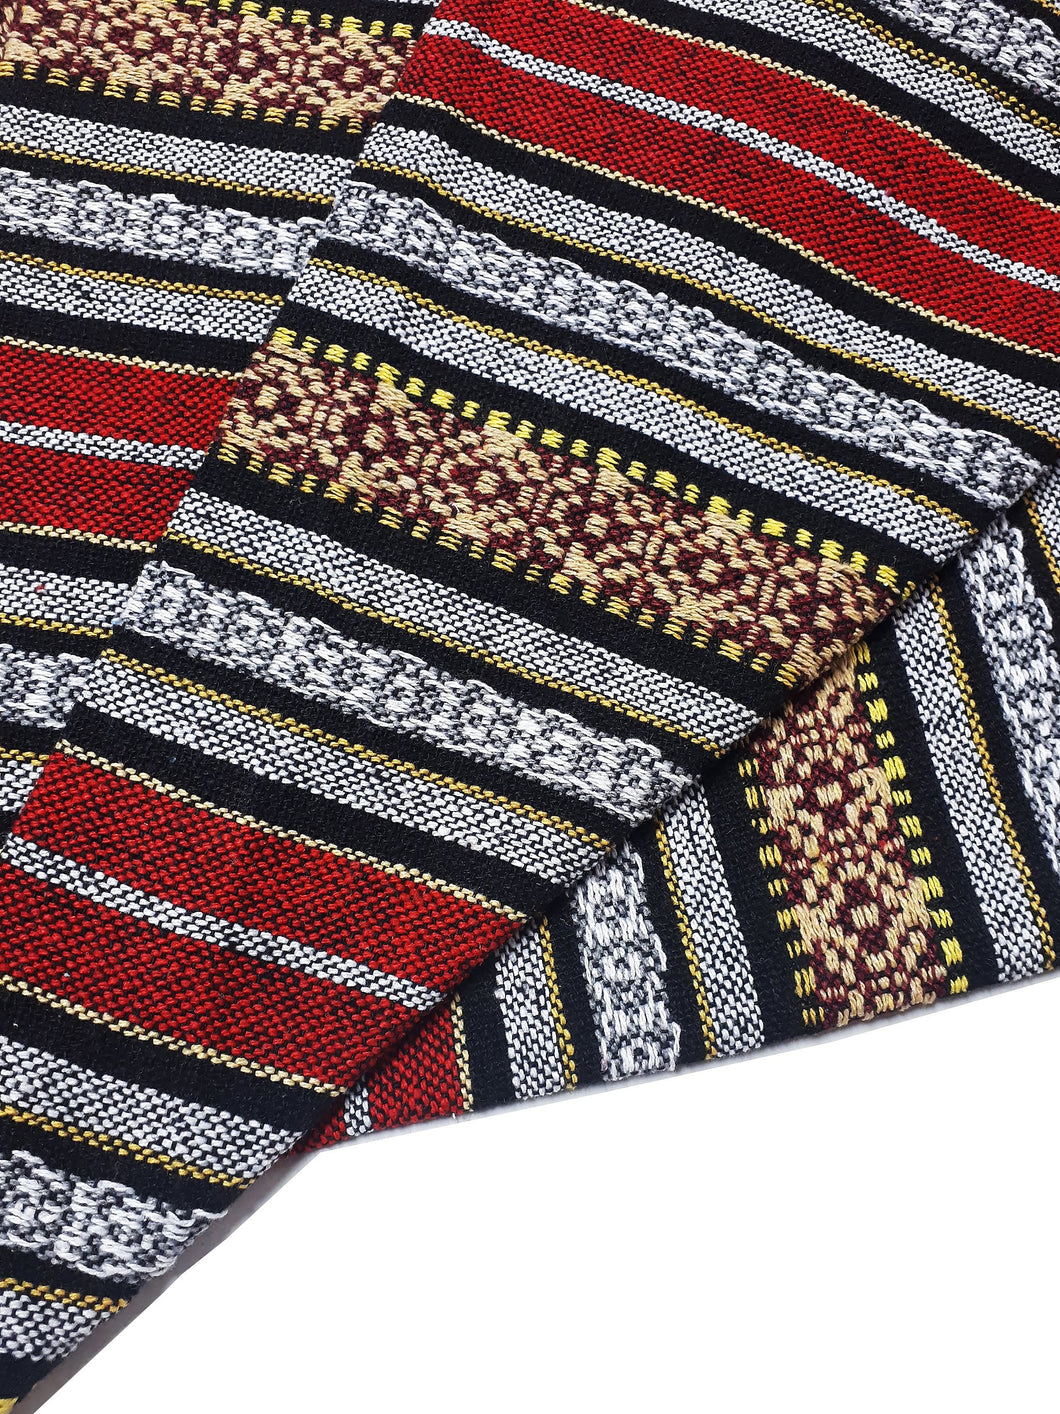 Thai Woven Cotton Fabric Tribal Fabric Native Fabric Ethnic fabric Aztec fabric Craft Supplies Woven Textile 1/2 yard (WF288)